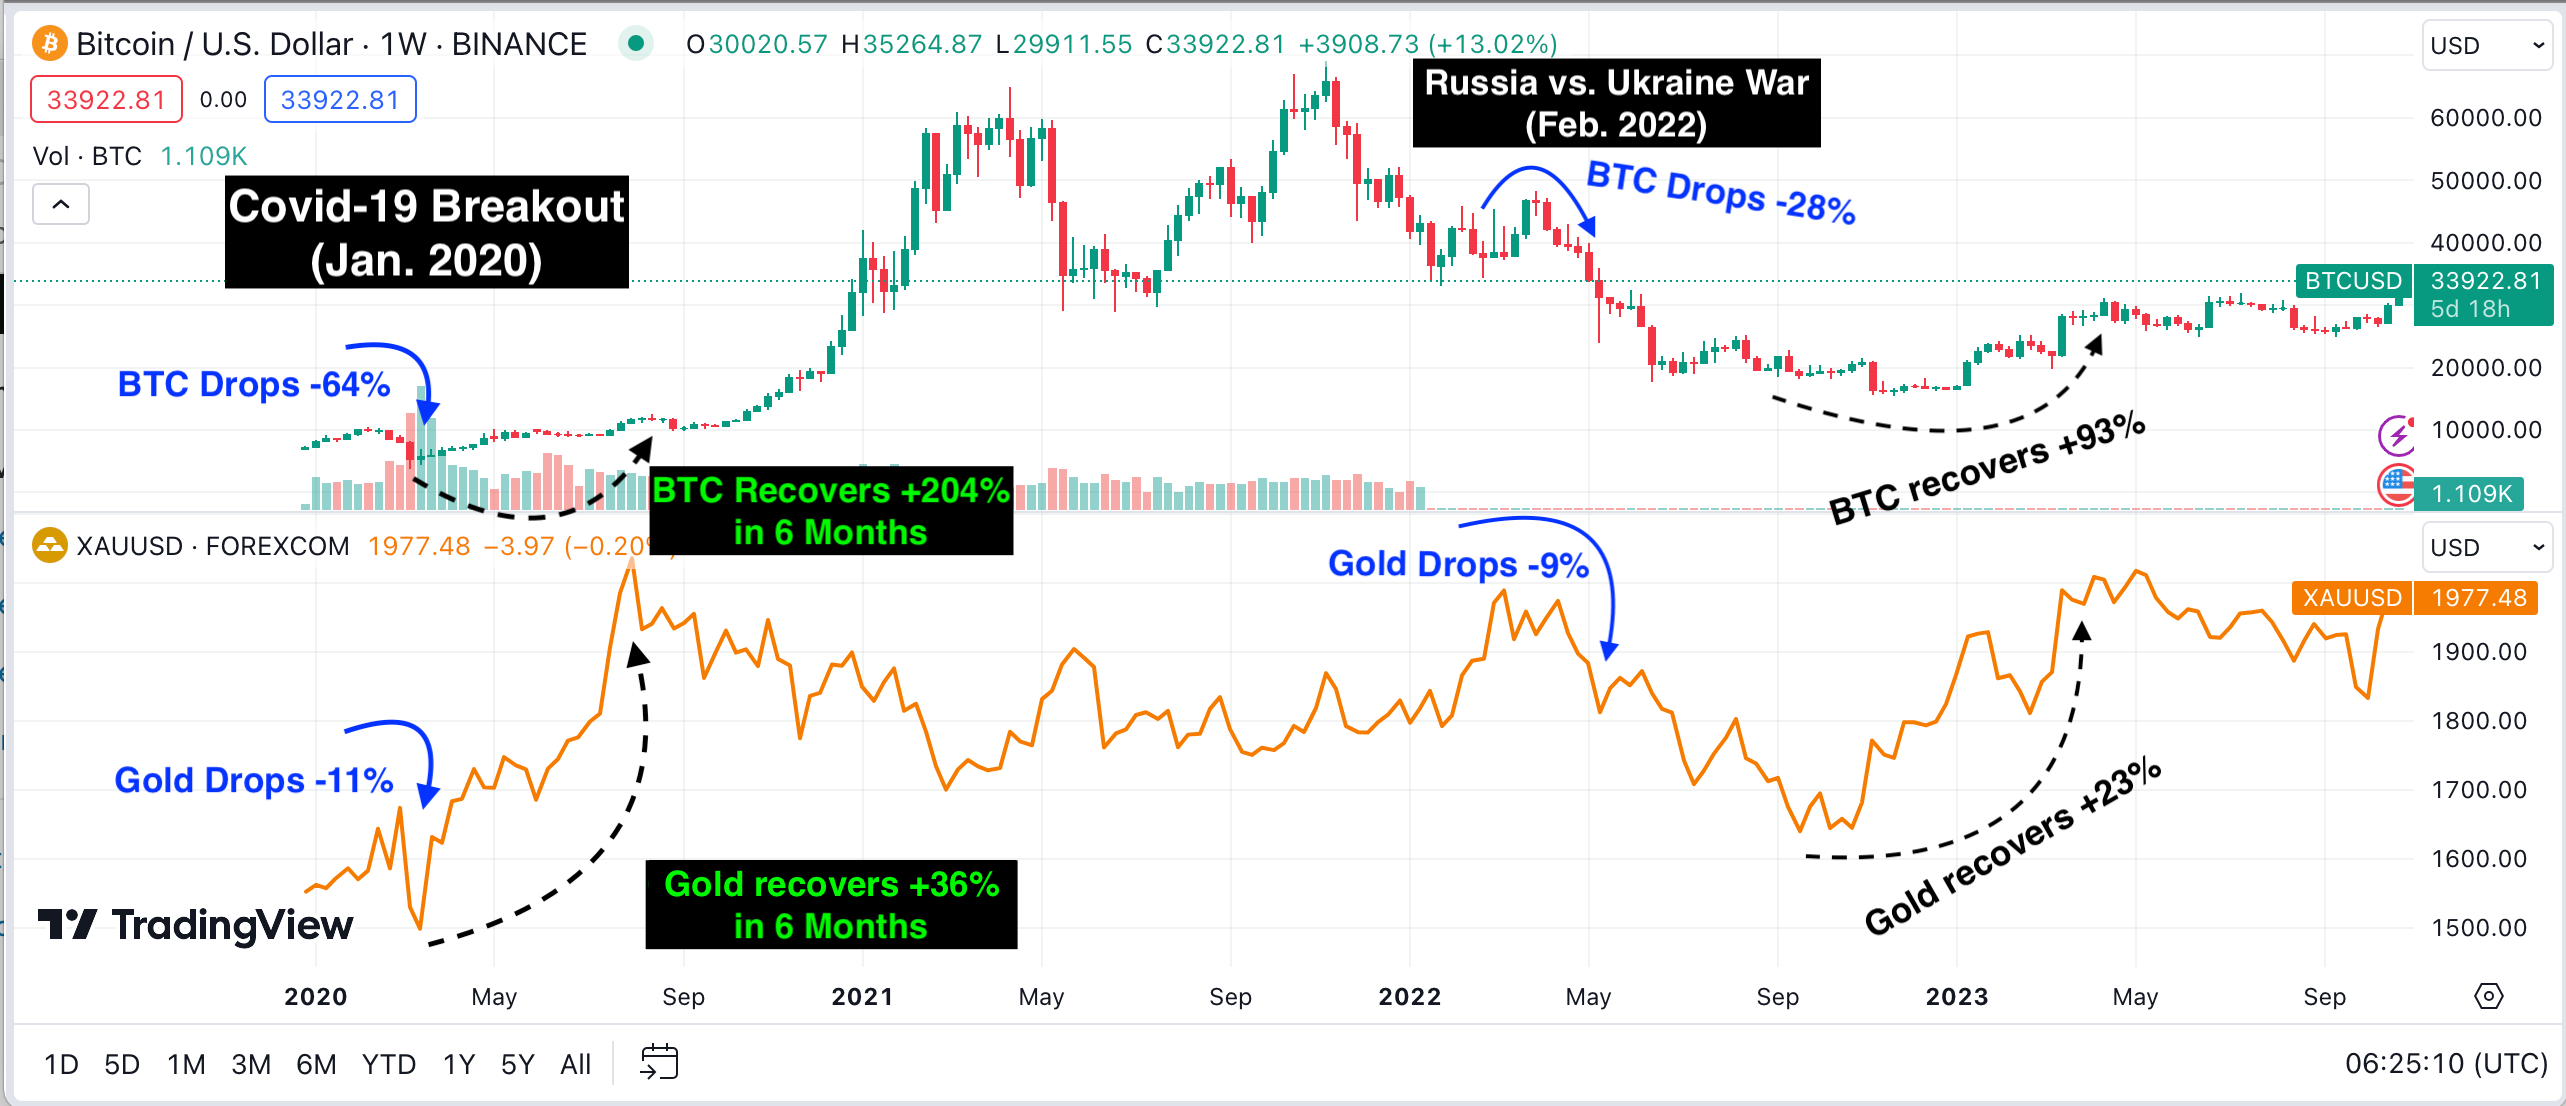 Bitcoin (BTC) vs Gold (XAU) Price Forecast 